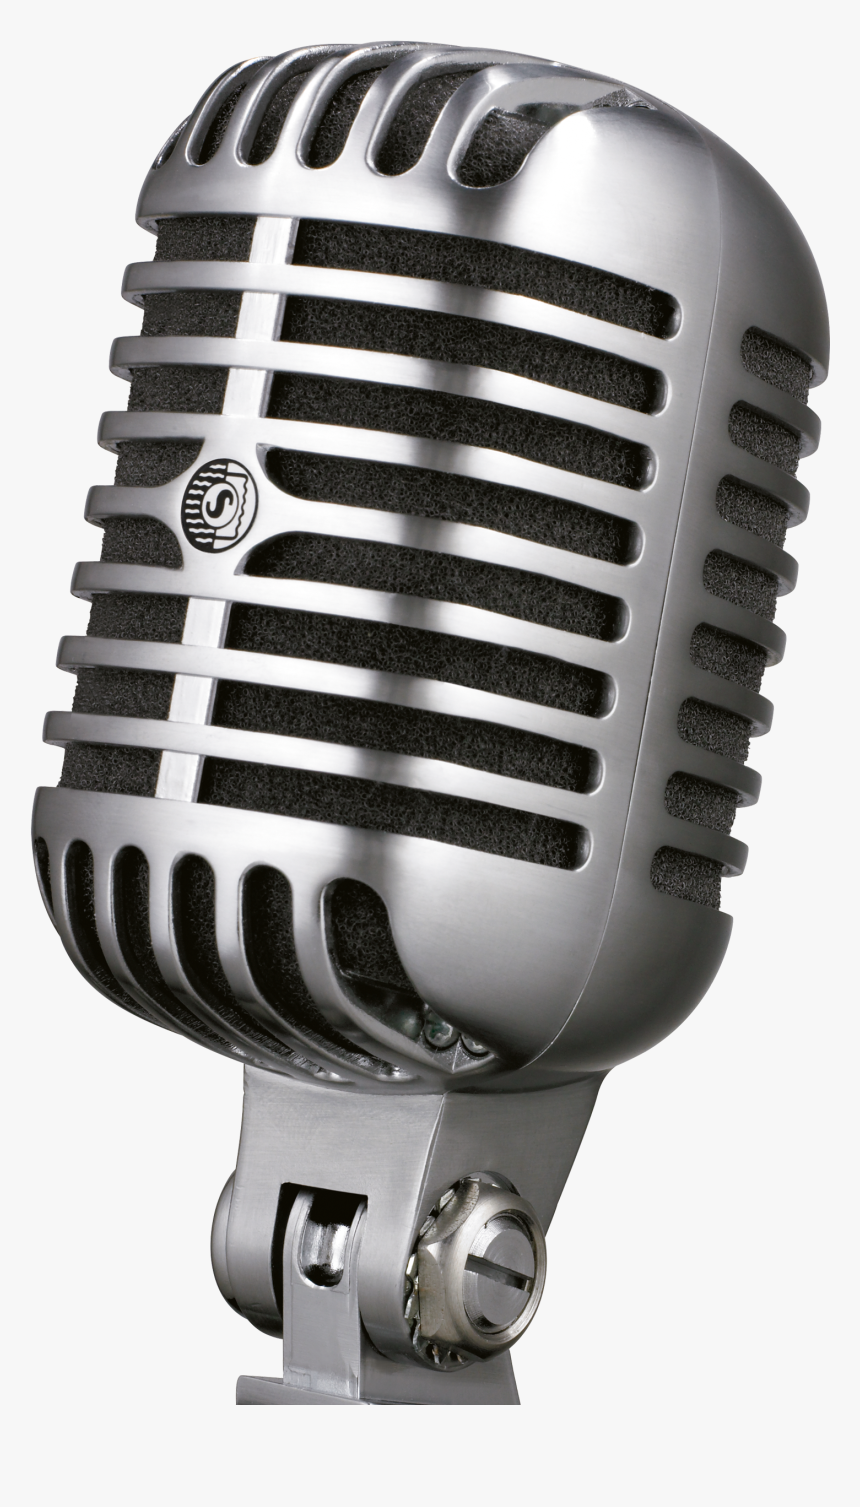 Microphone, Shure Microphones Wireless Microphones - Shure Microphones, HD Png Download, Free Download